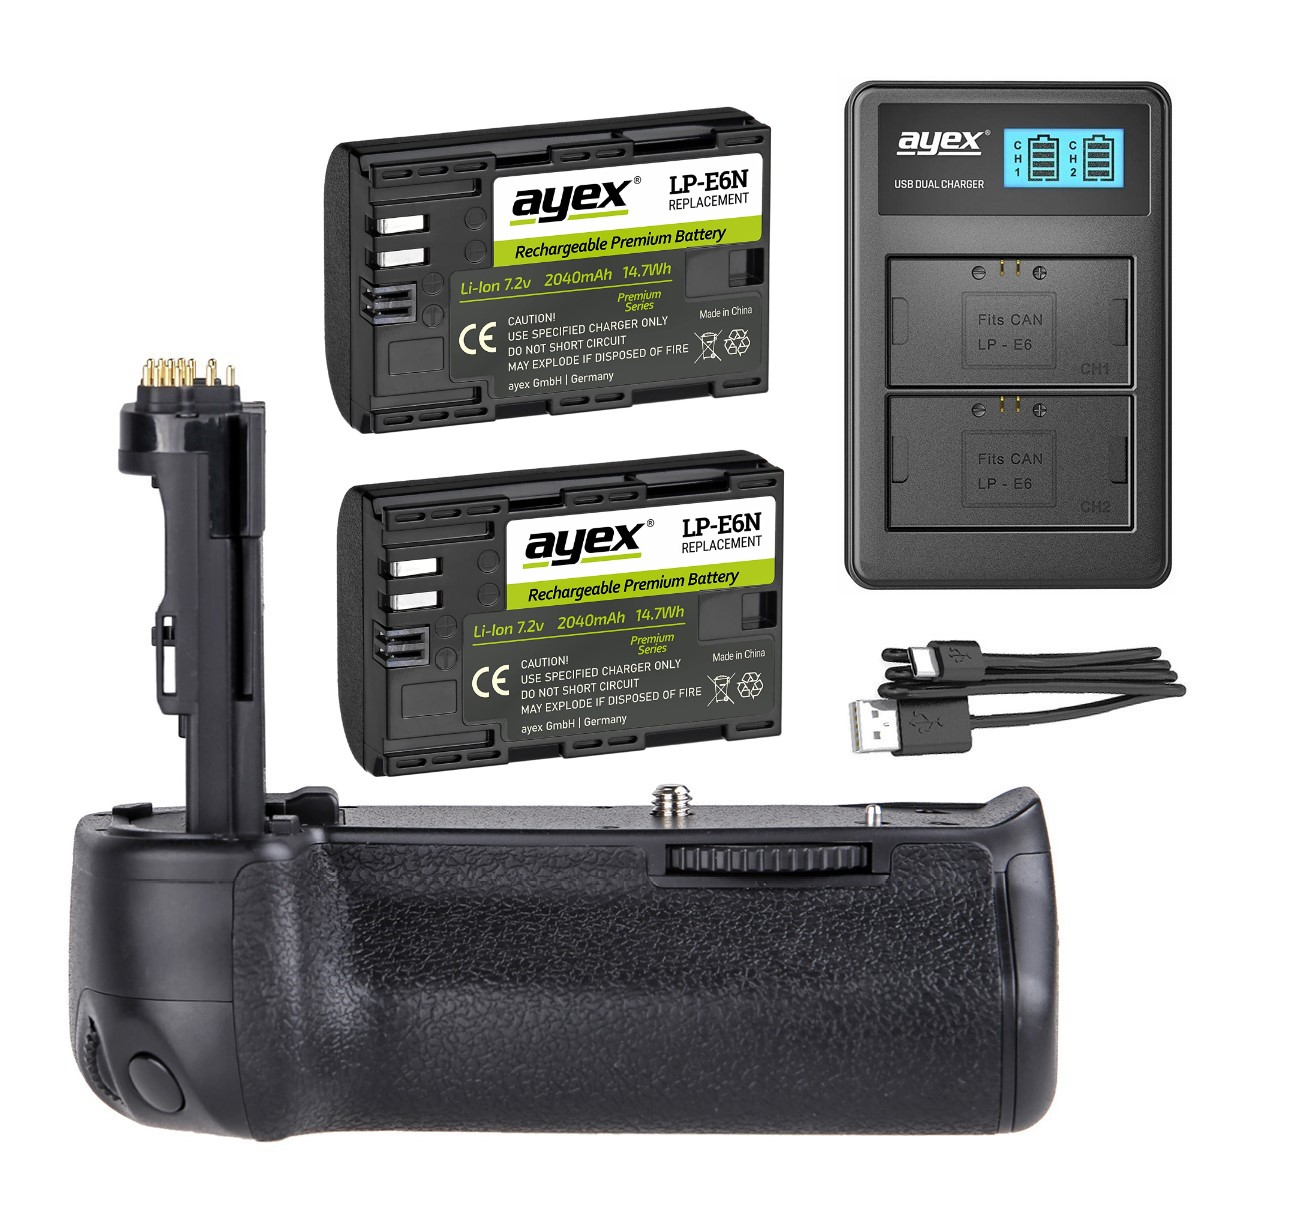 AYEX Batteriegriff 6D Mark Canon Akku + Batteriegriff 2x Set, LP-E6N BG-E21 Dual für Ladegerät, Set EOS II + USB Schwarz 1x wie